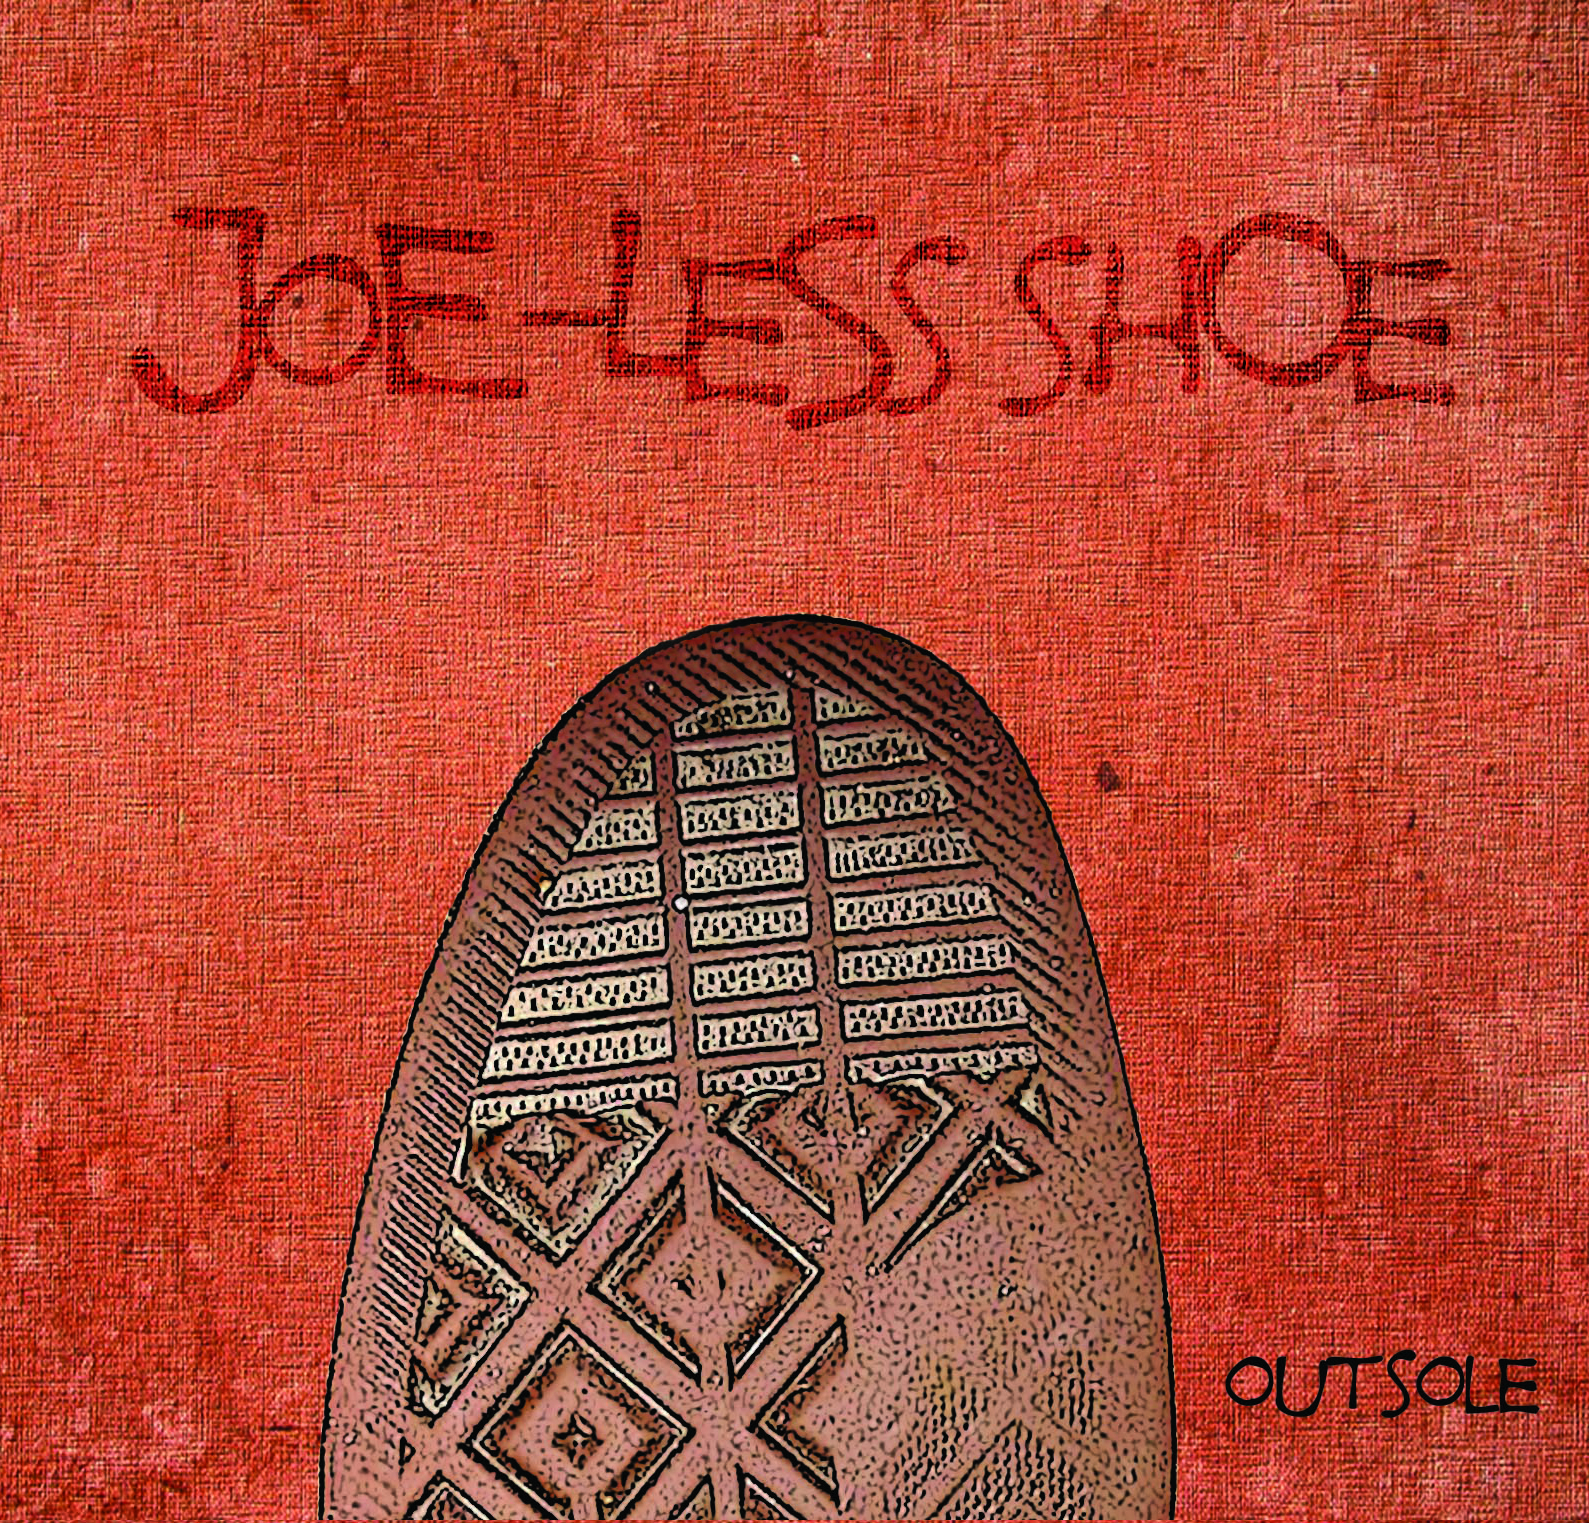 Joe-Less Shoe “Out sole”